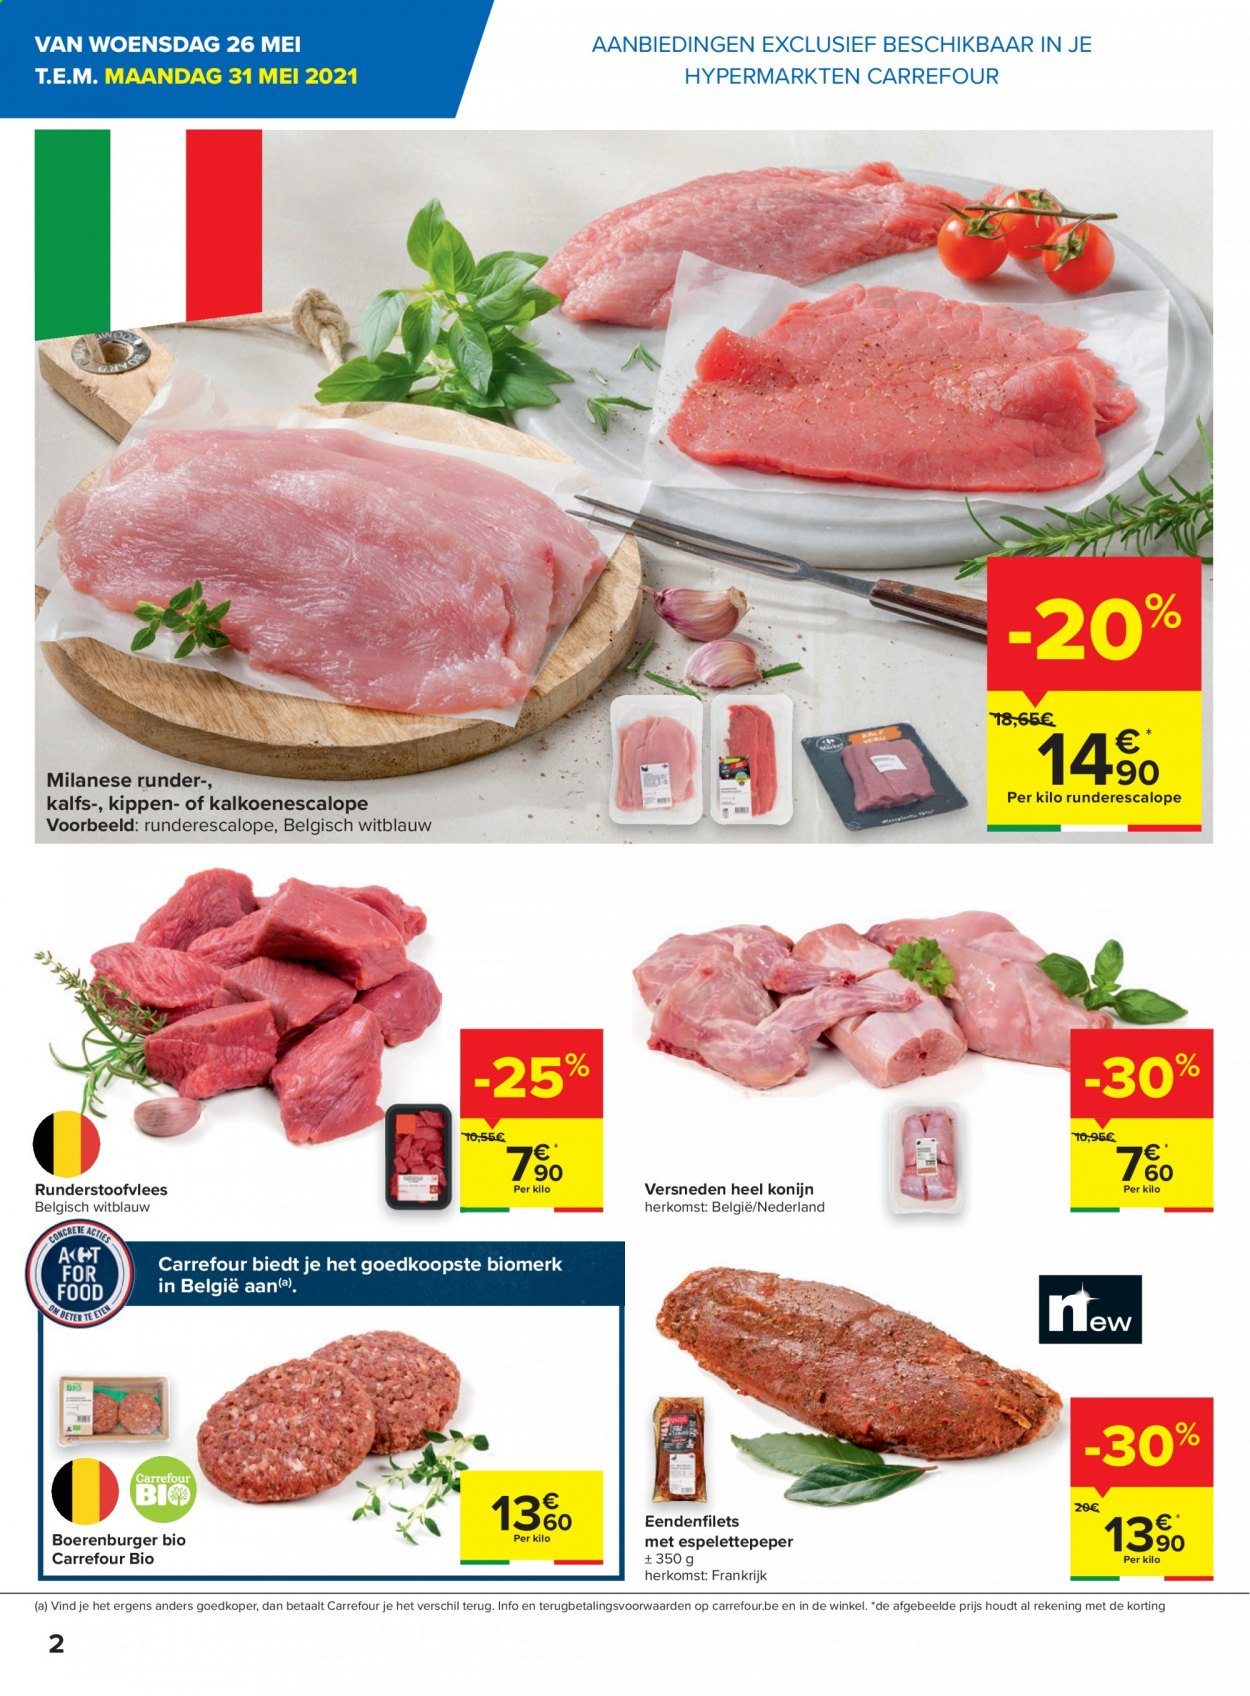 thumbnail - Carrefour hypermarkt-aanbieding - 26/05/2021 - 07/06/2021 -  producten in de aanbieding - konijn. Pagina 2.